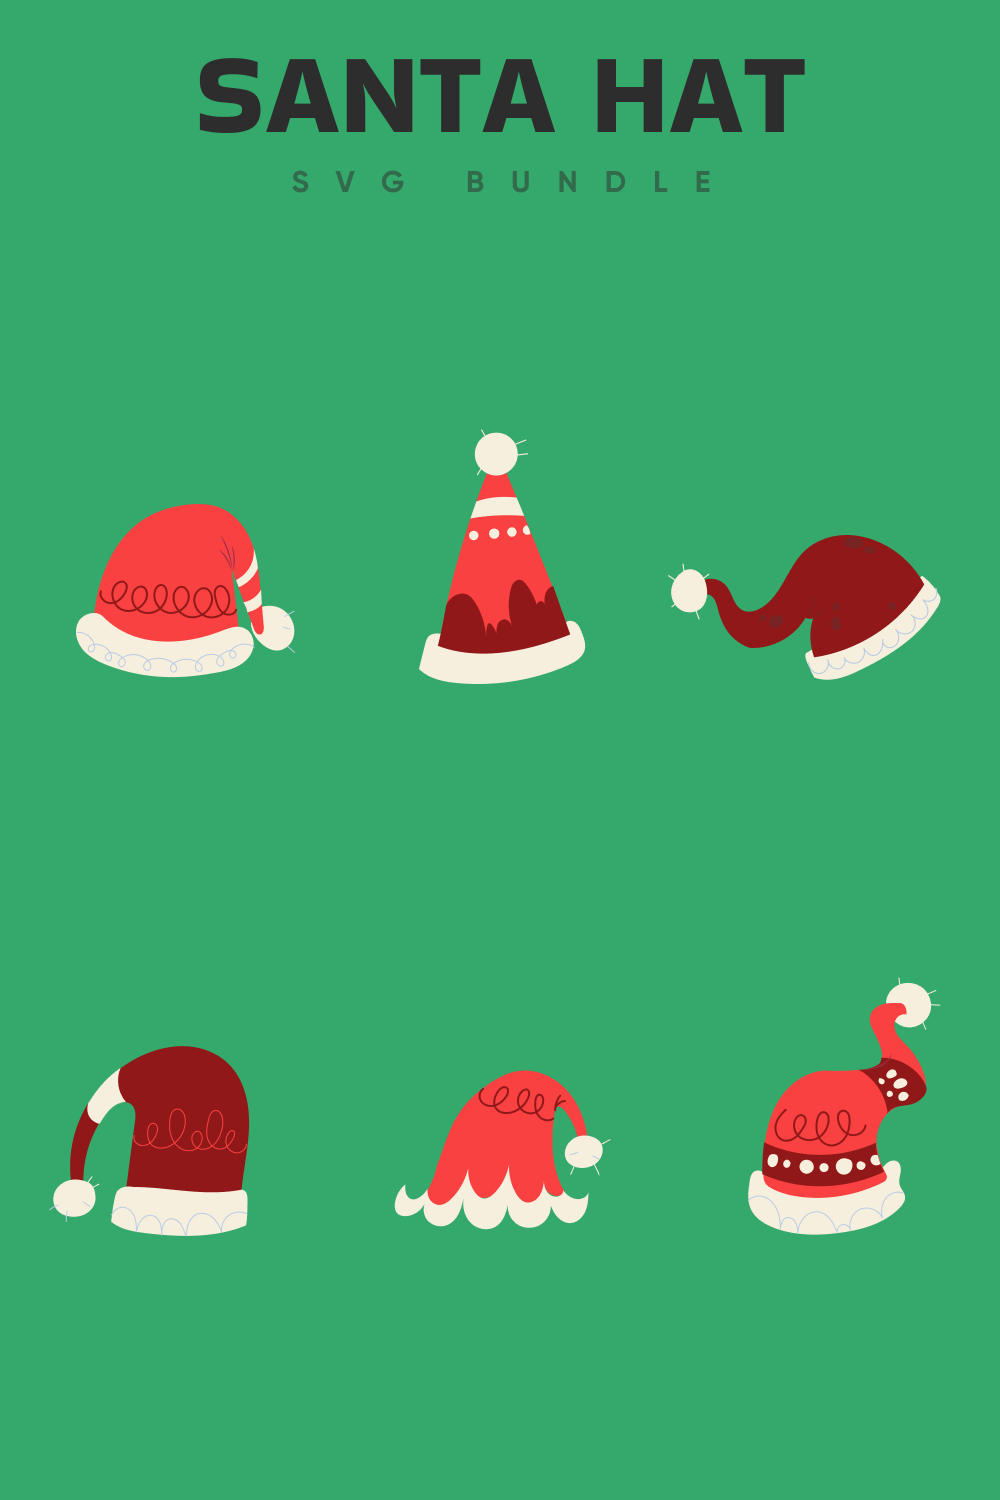 Diverse of Santa's hats.